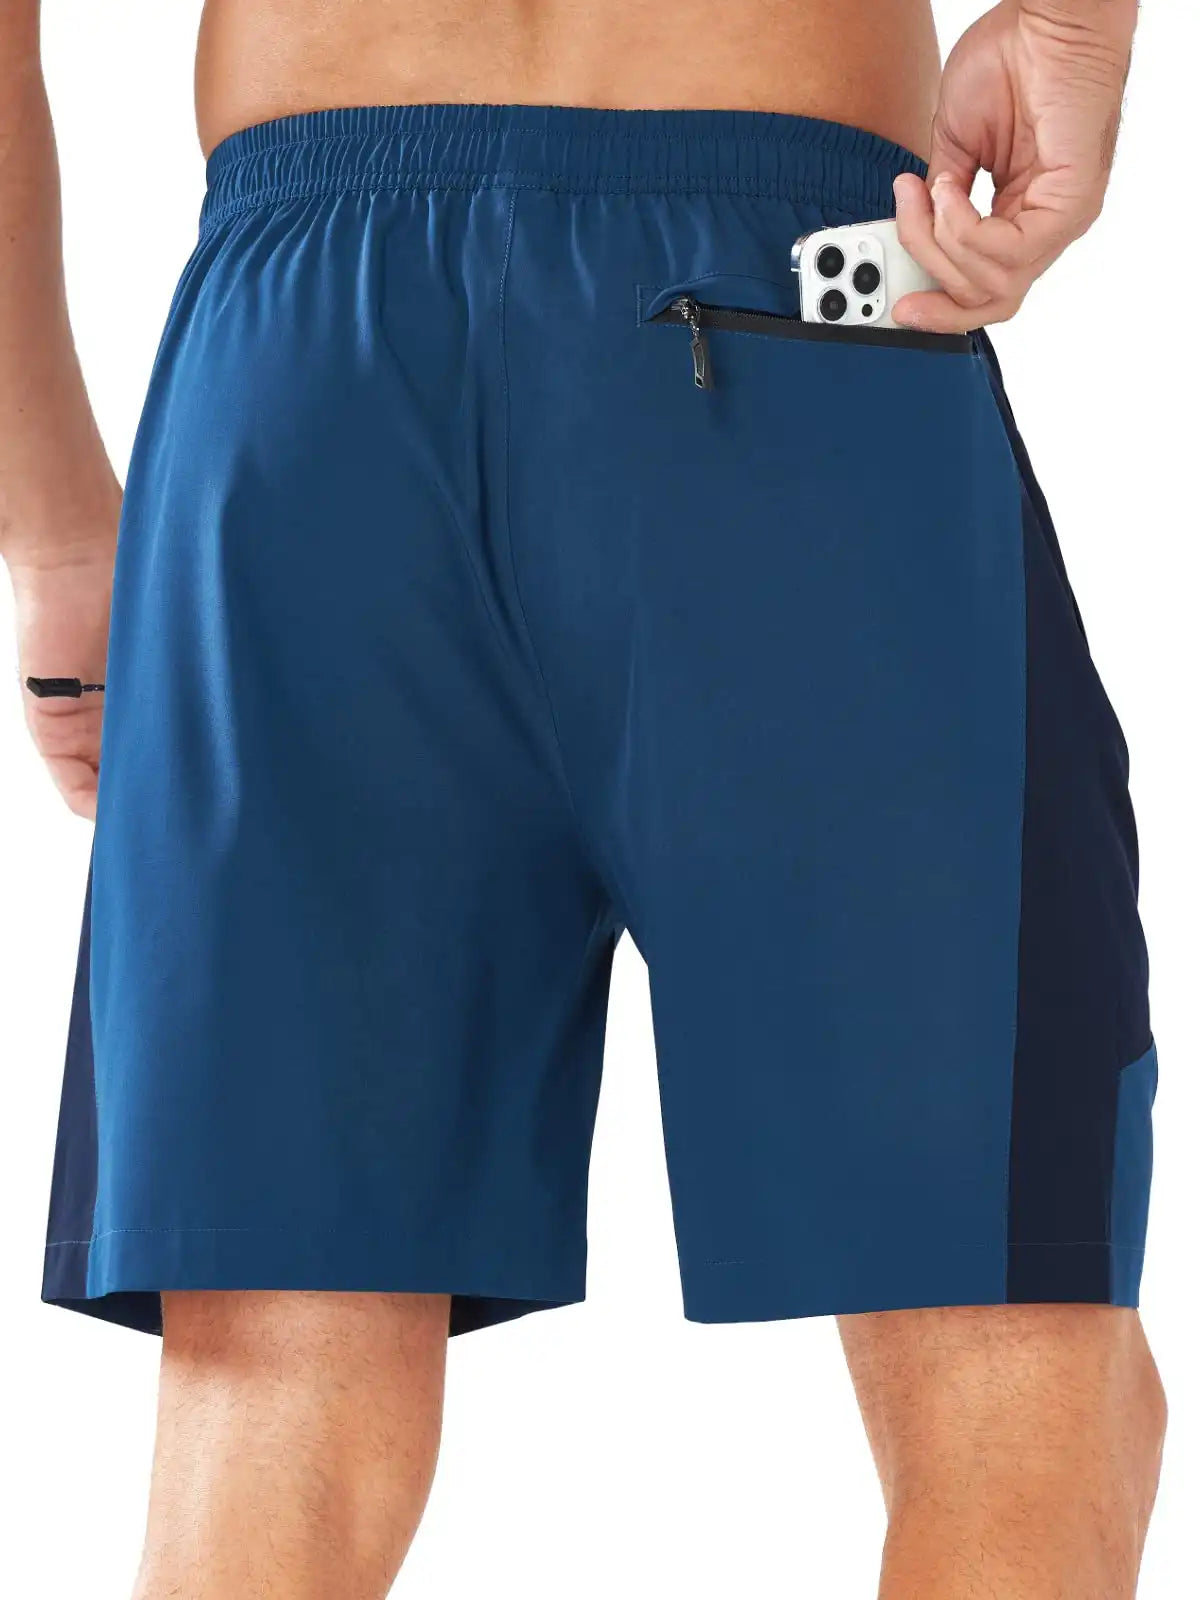 Men's 7" Athletic Shorts Whit 3 Zip Pockets 